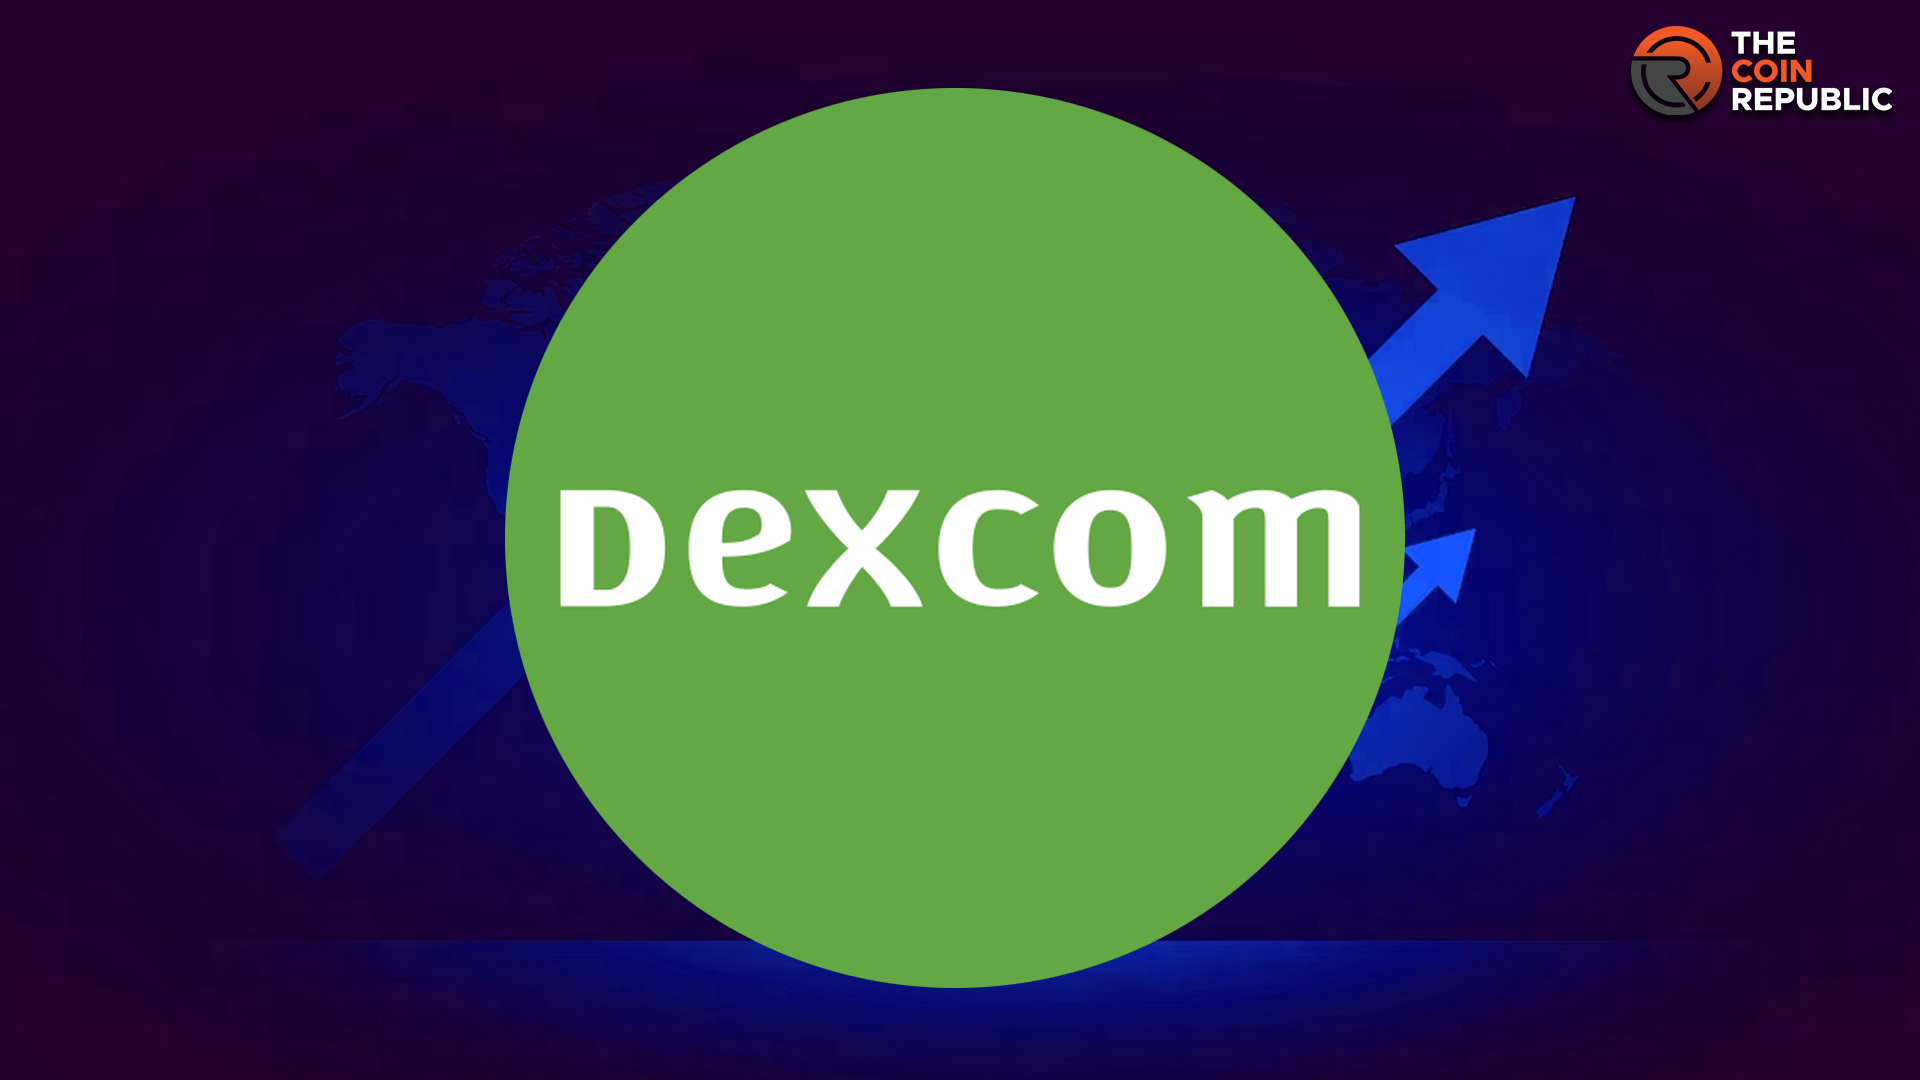 DXCM Stock: Will DexCom Inc. Stock Price Drop More from $100.00?